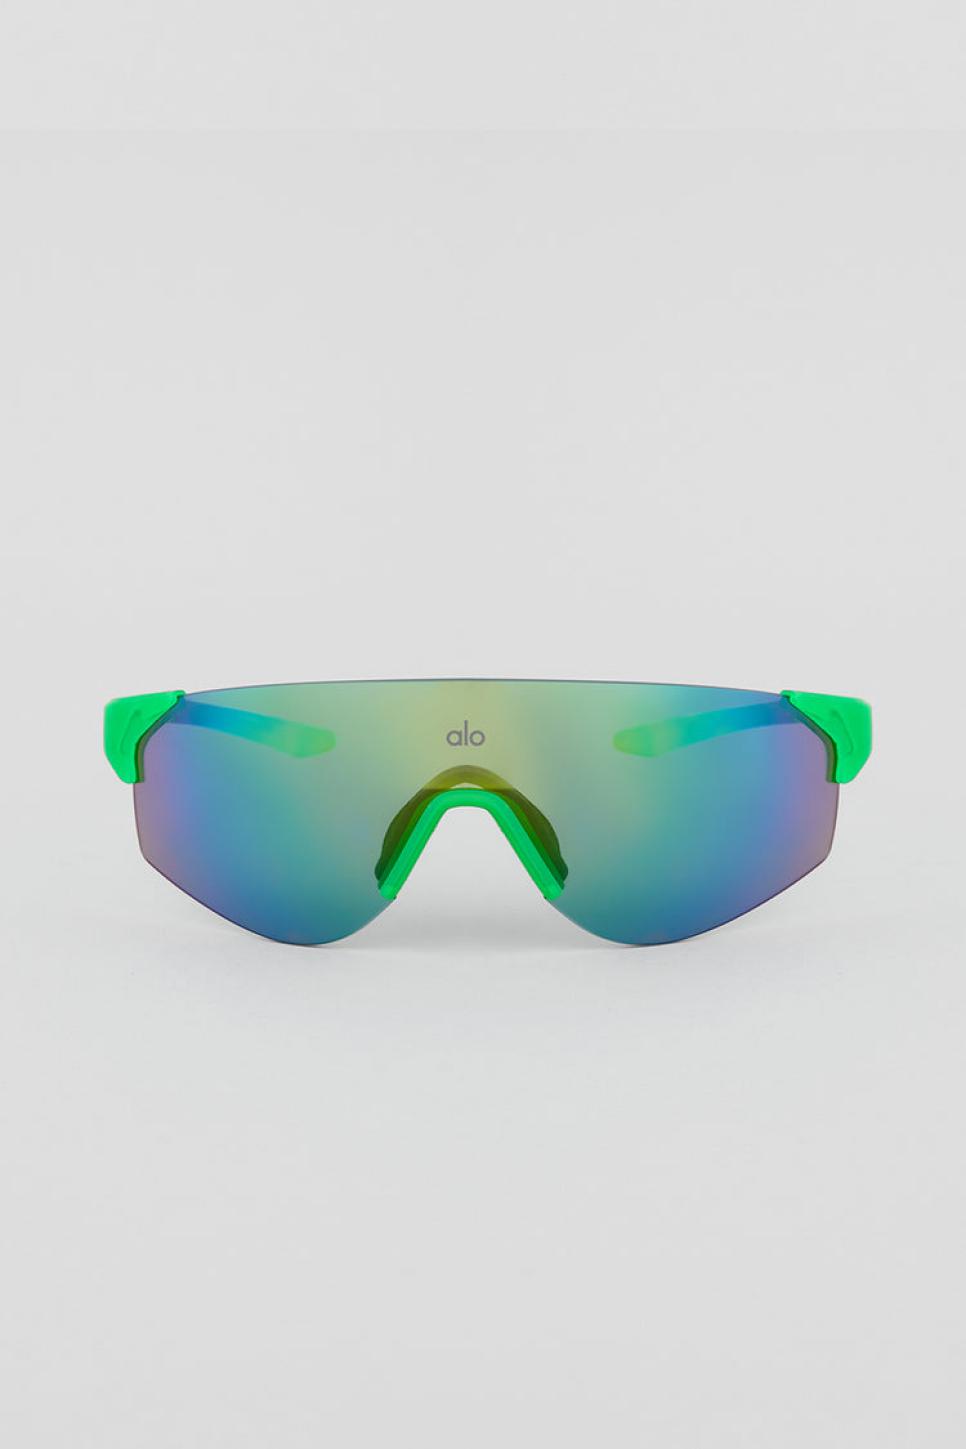 rx-aloyogaalo-yoga-speed-sunglasses---green-glow-mirror.jpeg